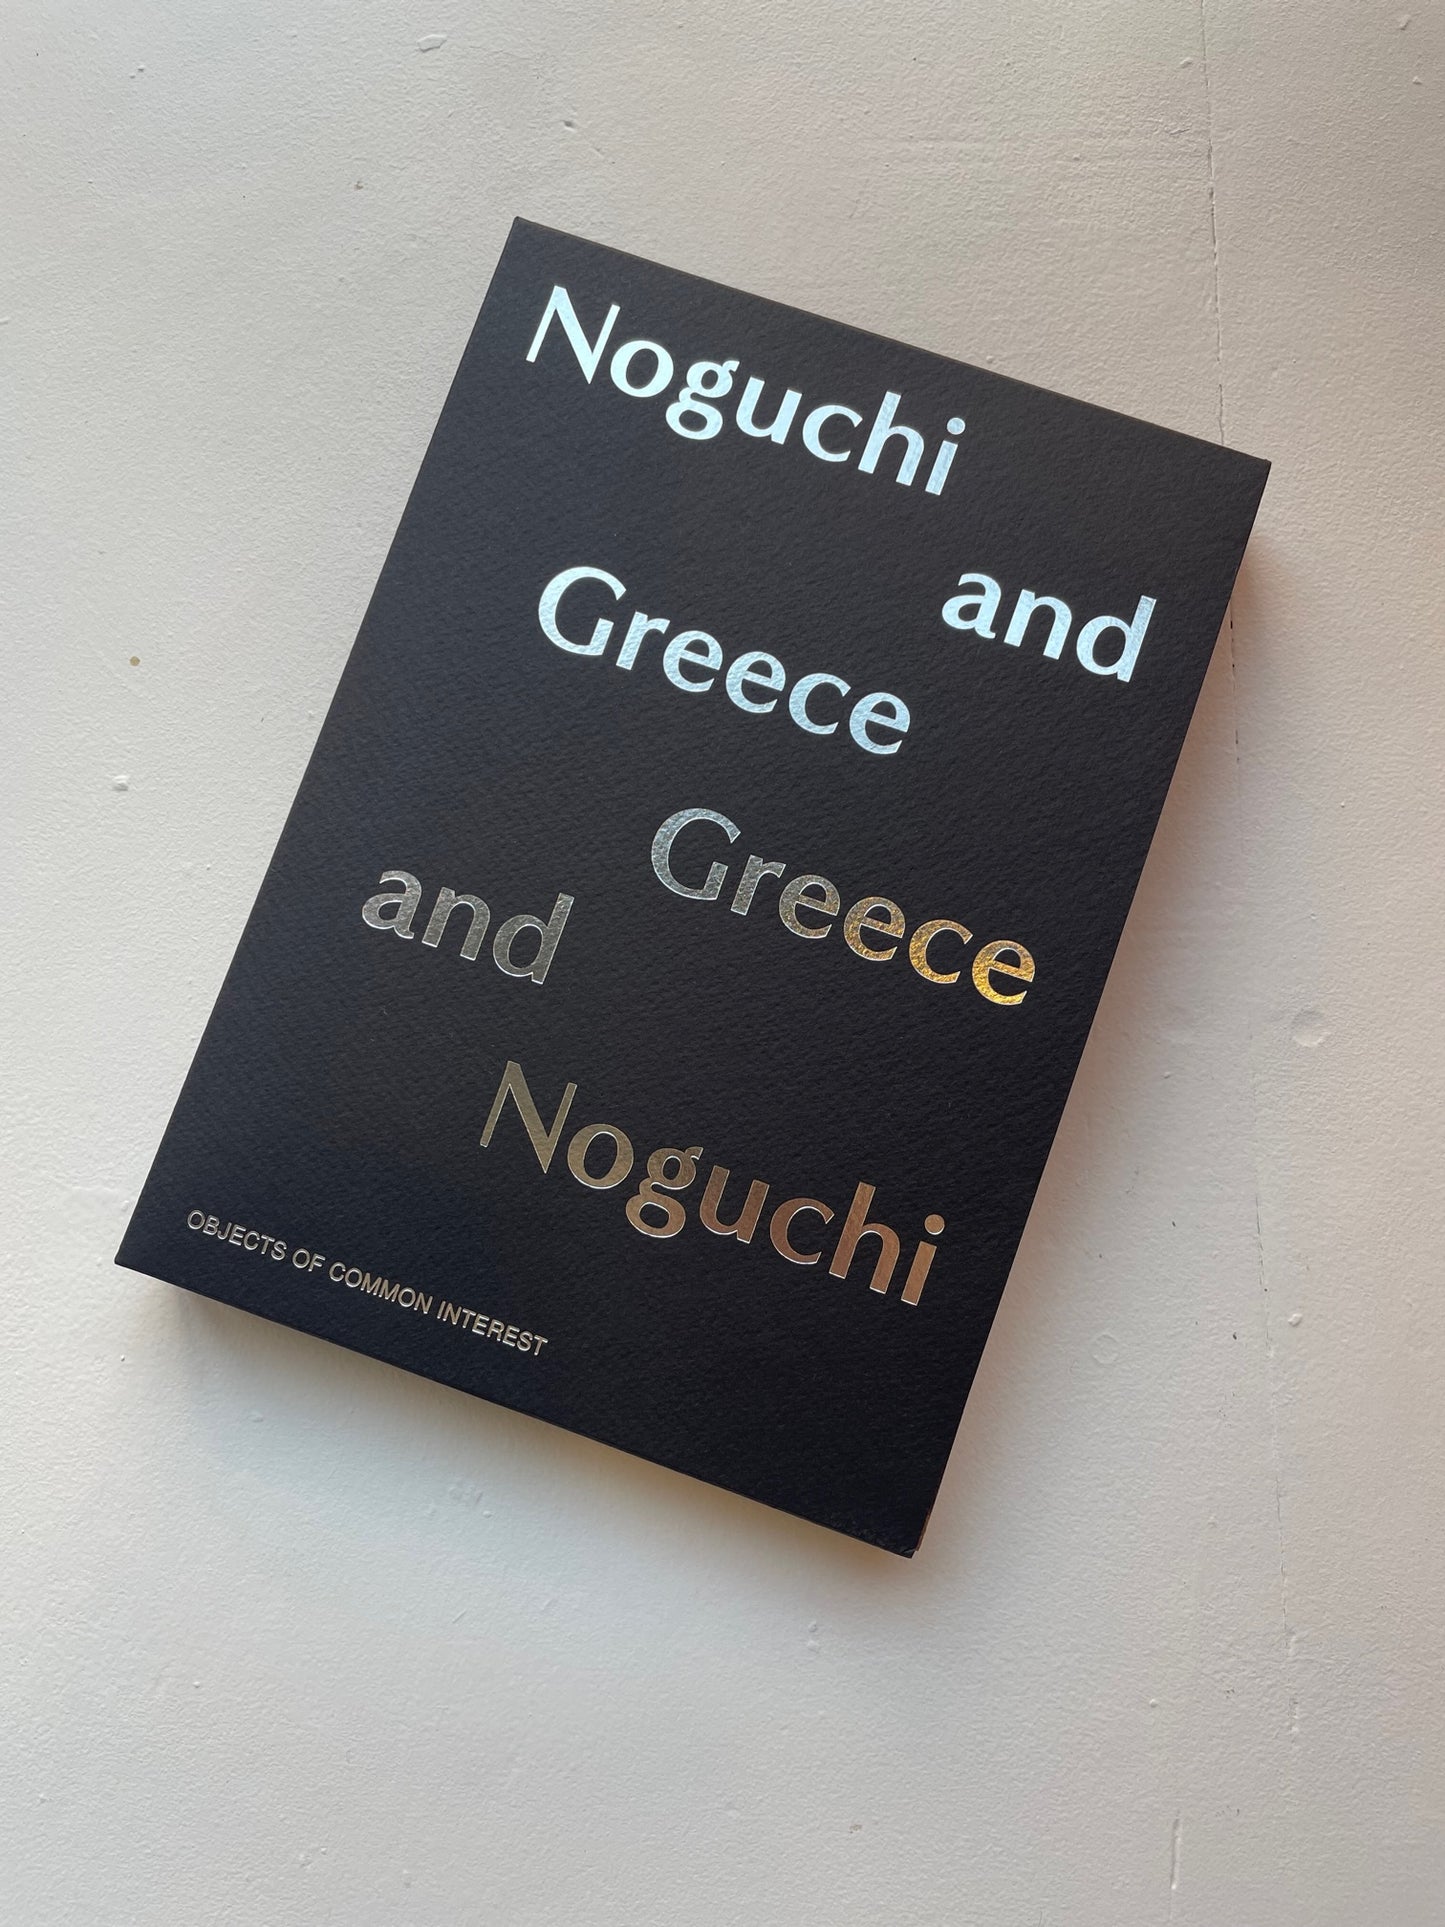 Noguchi and Greece Greece and Noguchi